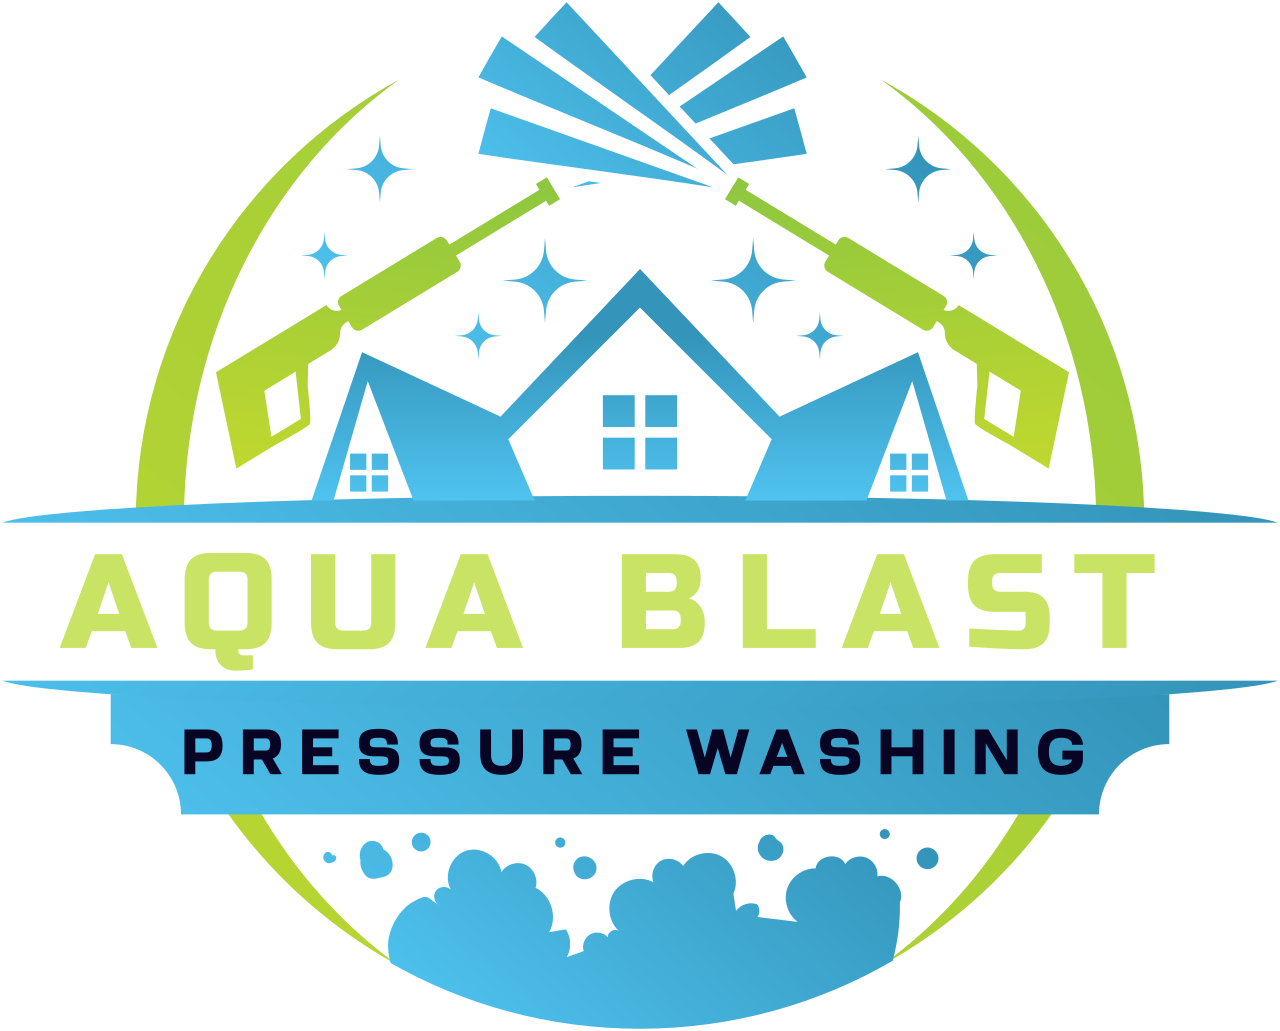 Aqua Blast Pressure Washing's logo